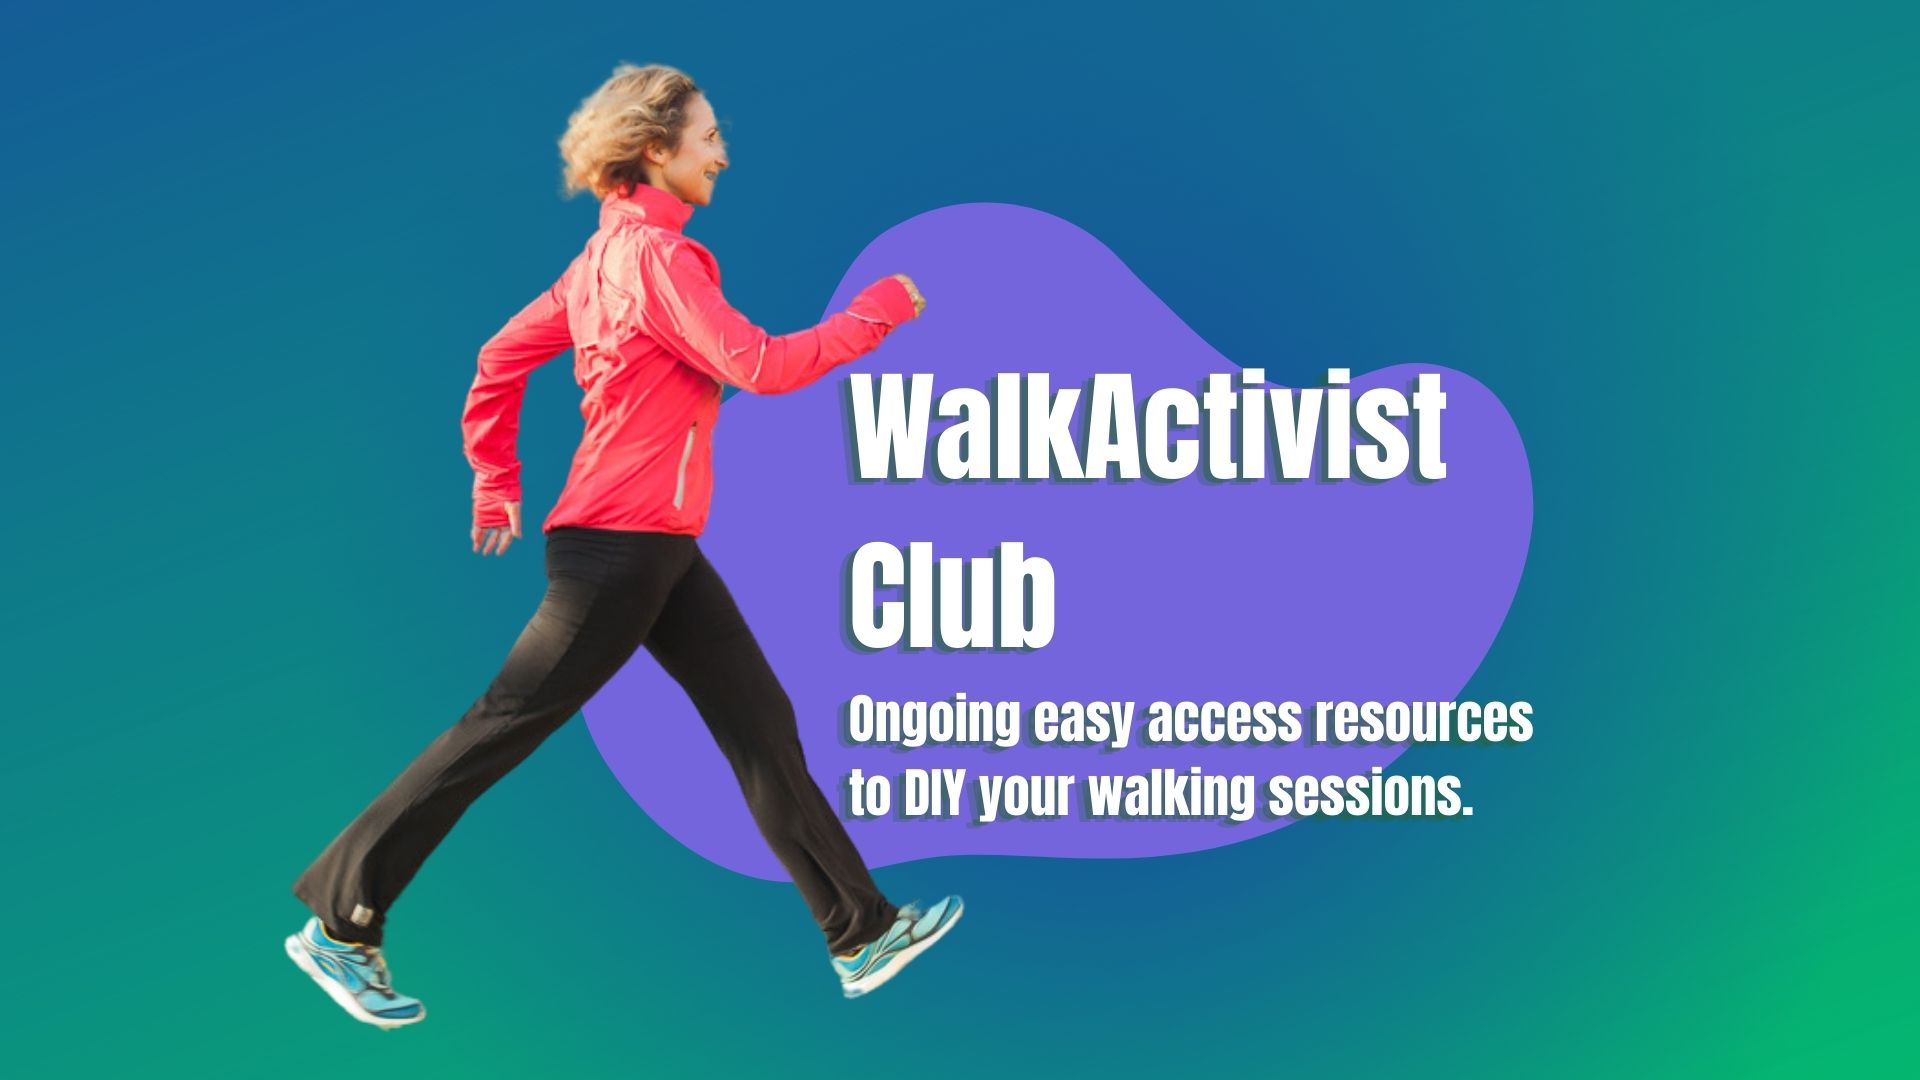 WalkActivist Club